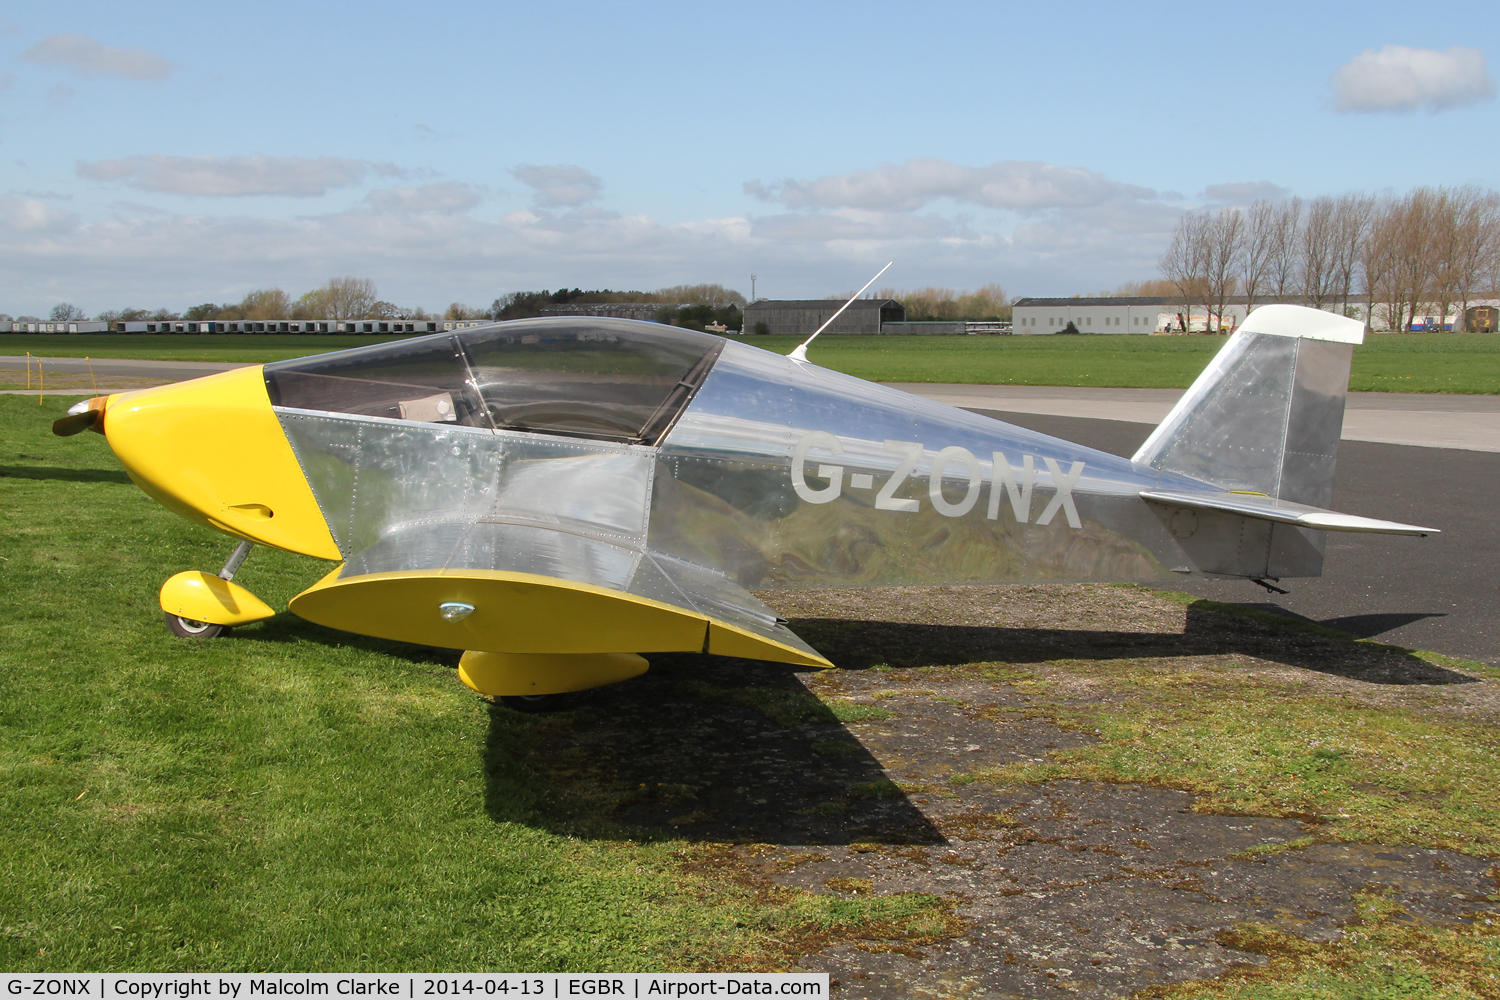 G-ZONX, 2007 Sonex Sonex C/N PFA 337-14689, Sonex at The Real Aeroplane Club's Early Bird Fly-In, Breighton Airfield, April 2014.